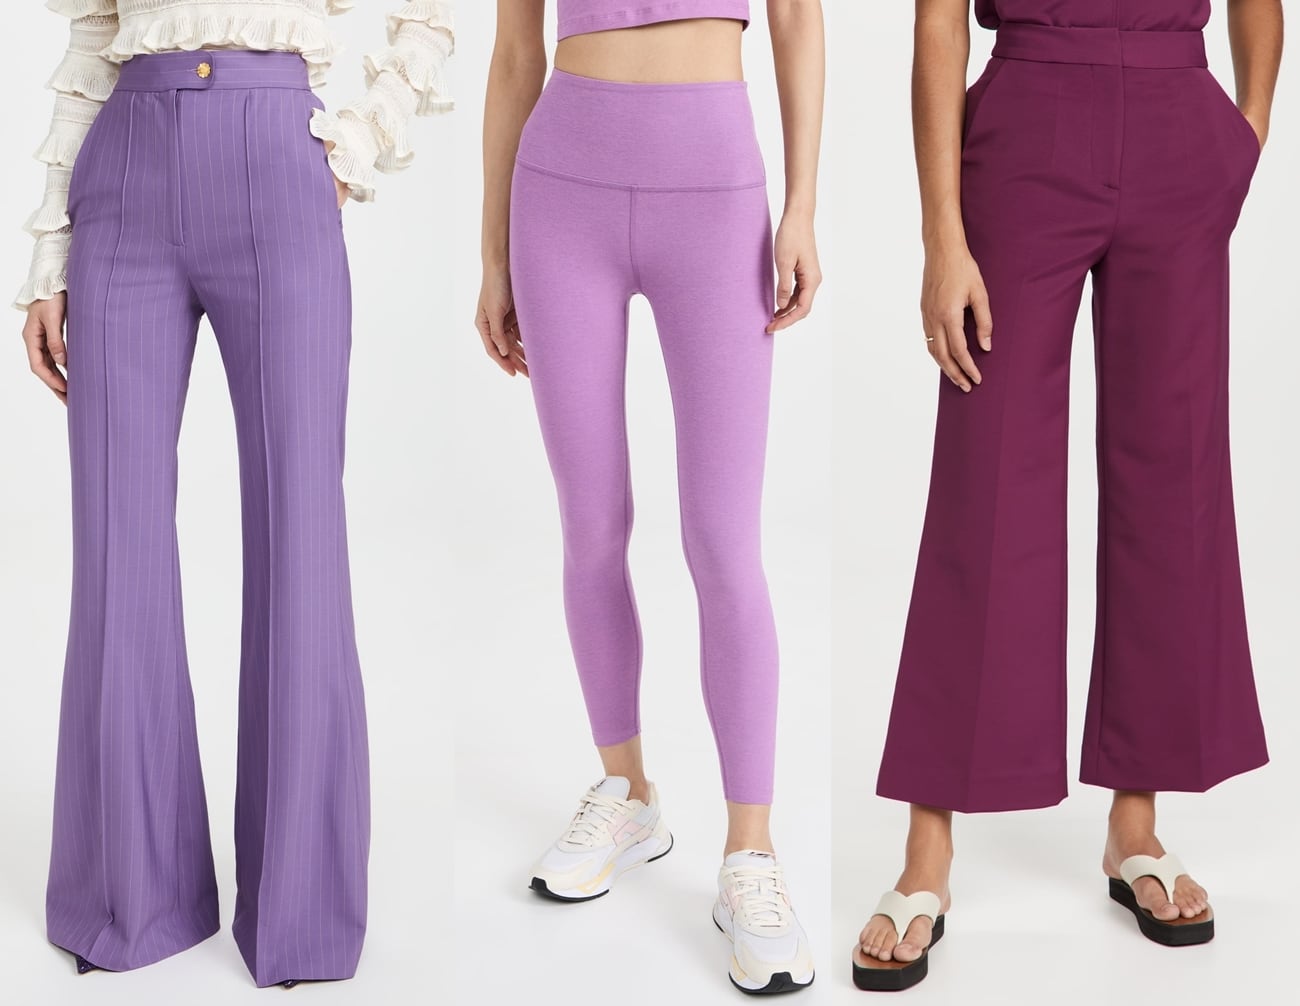 How to Wear Purple Pants: 3 Tips to Look Pretty in Purple